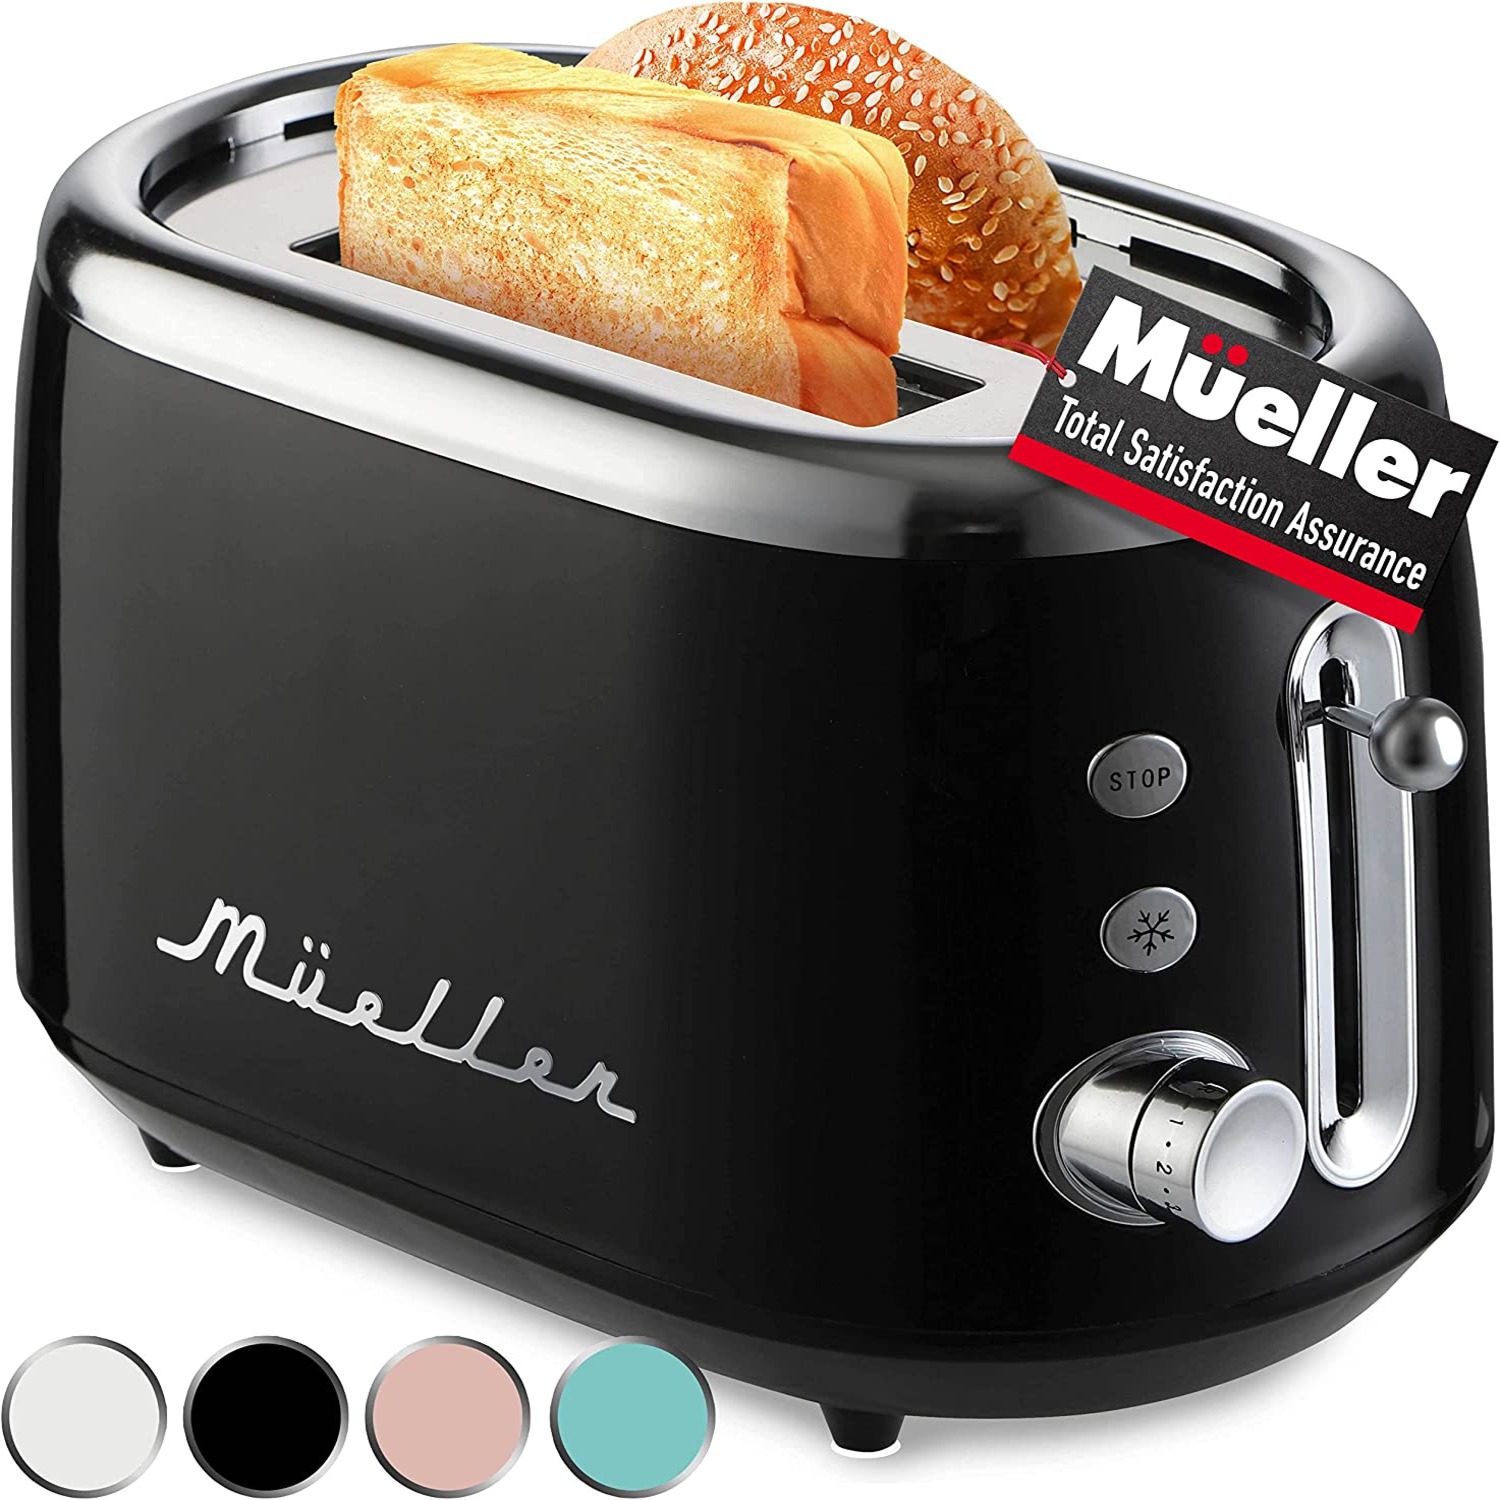 https://muellerhome.us/wp-content/uploads/2022/12/muellerhome_RetroToast0-2-Slice-Toaster-Black1.jpg